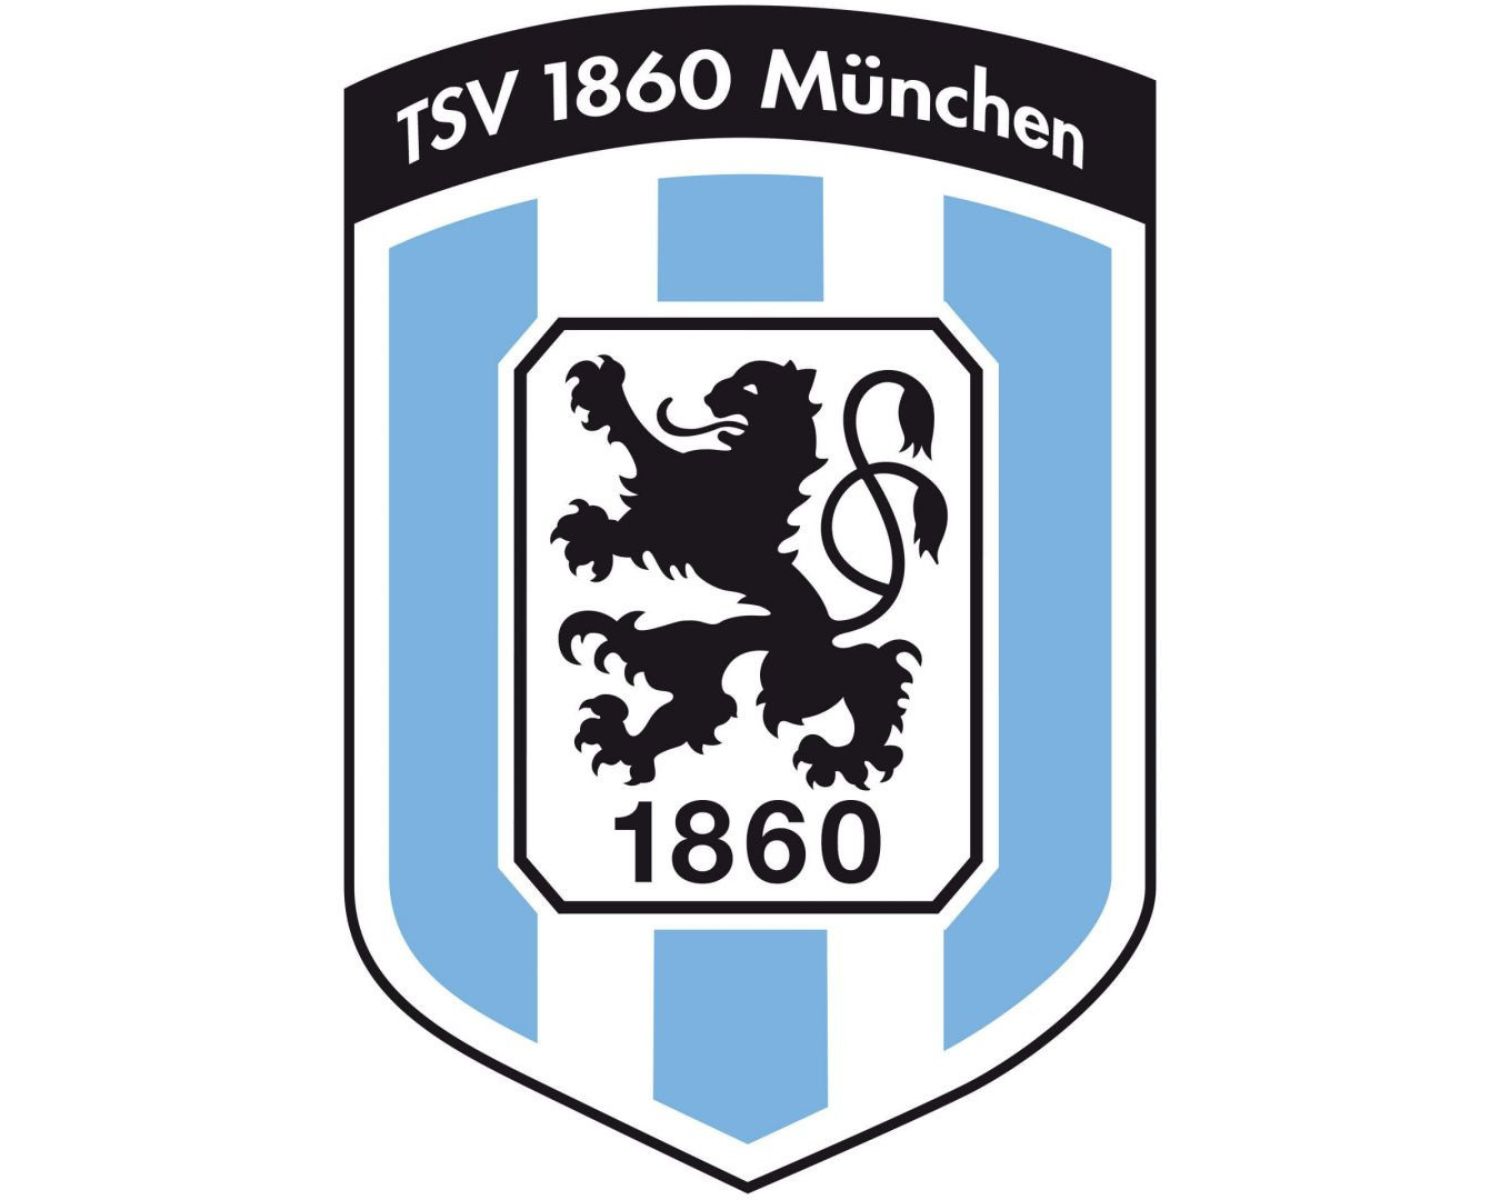 Tsv 1860 München U19: 19 Football Club Facts - Facts.net